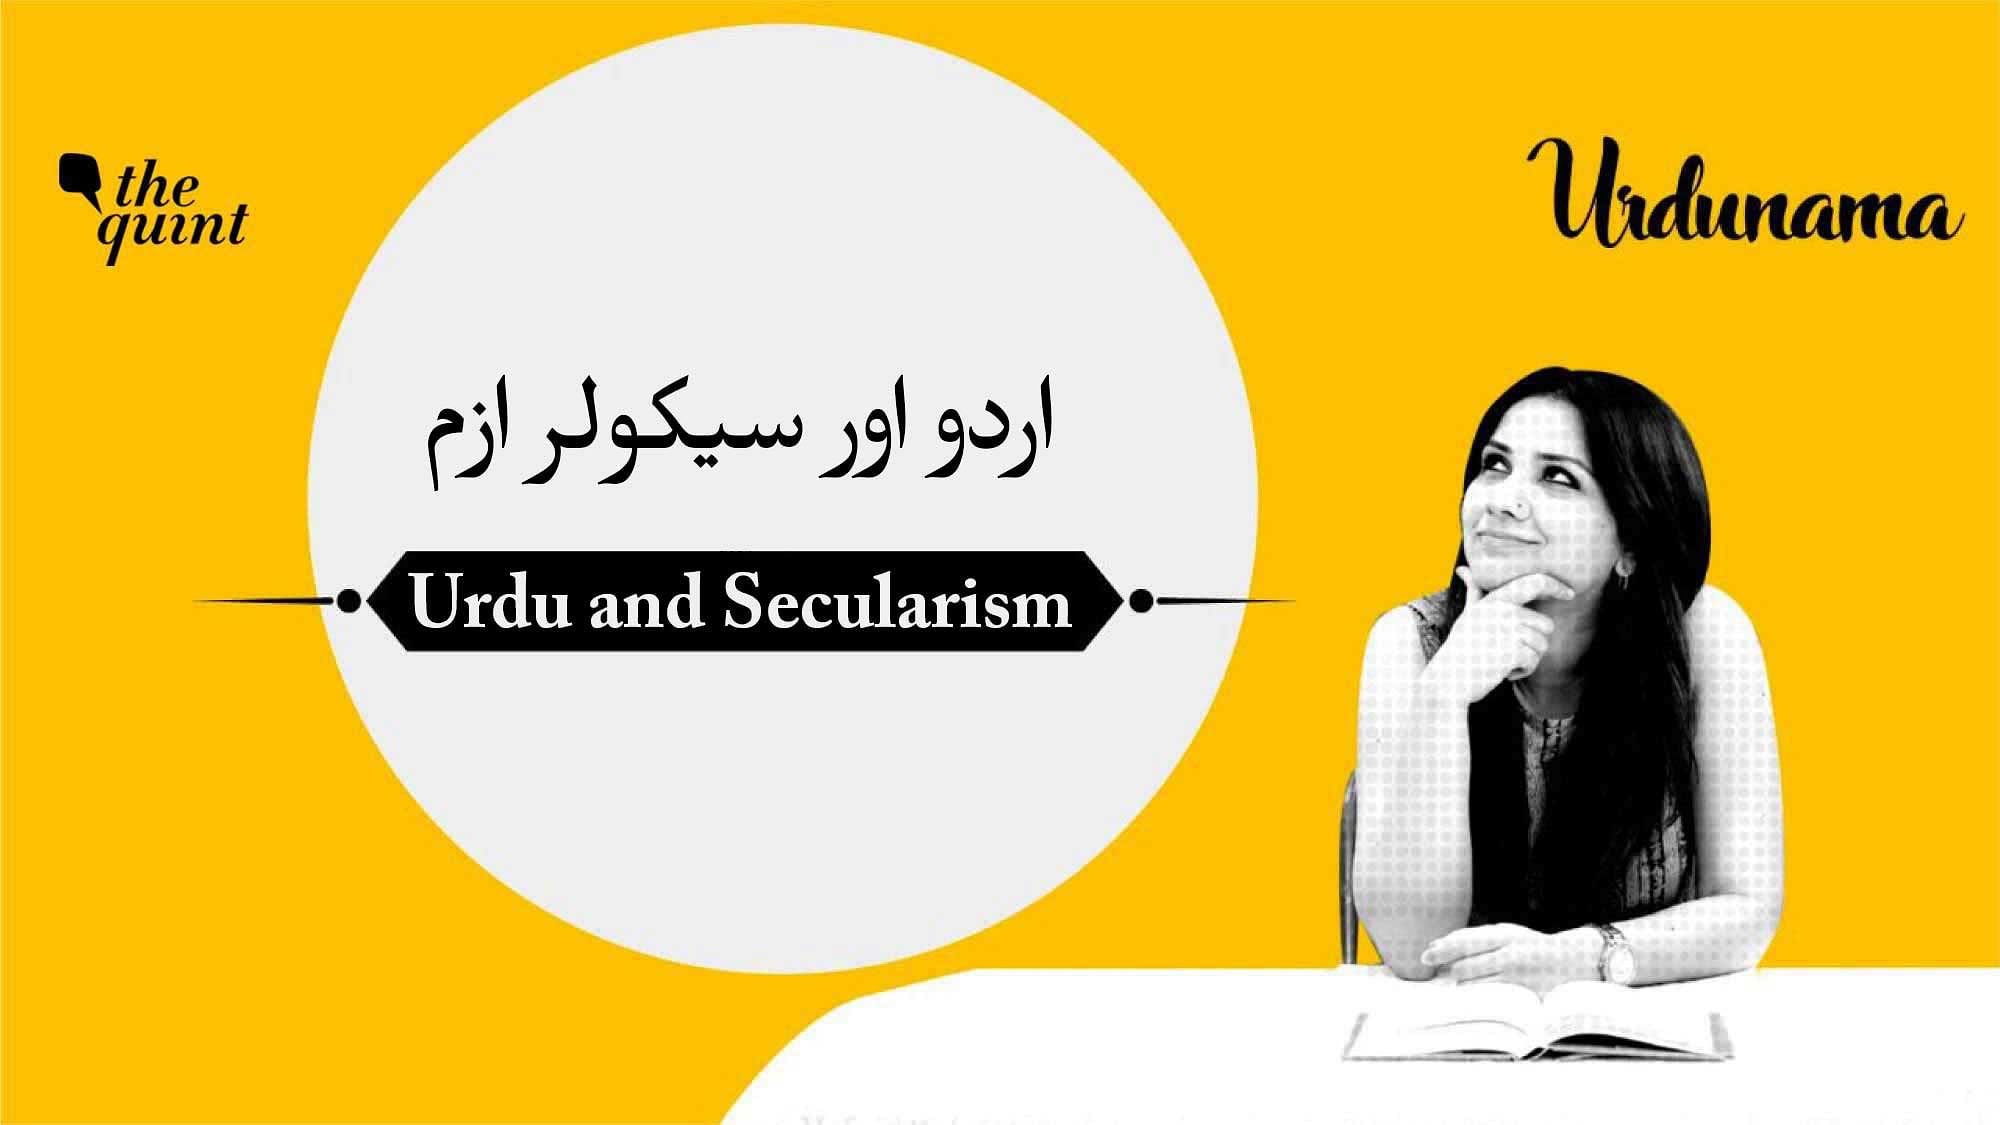 <div class="paragraphs"><p>We explore some gems in Urdu poetry that celebrate India's secularism.</p></div>